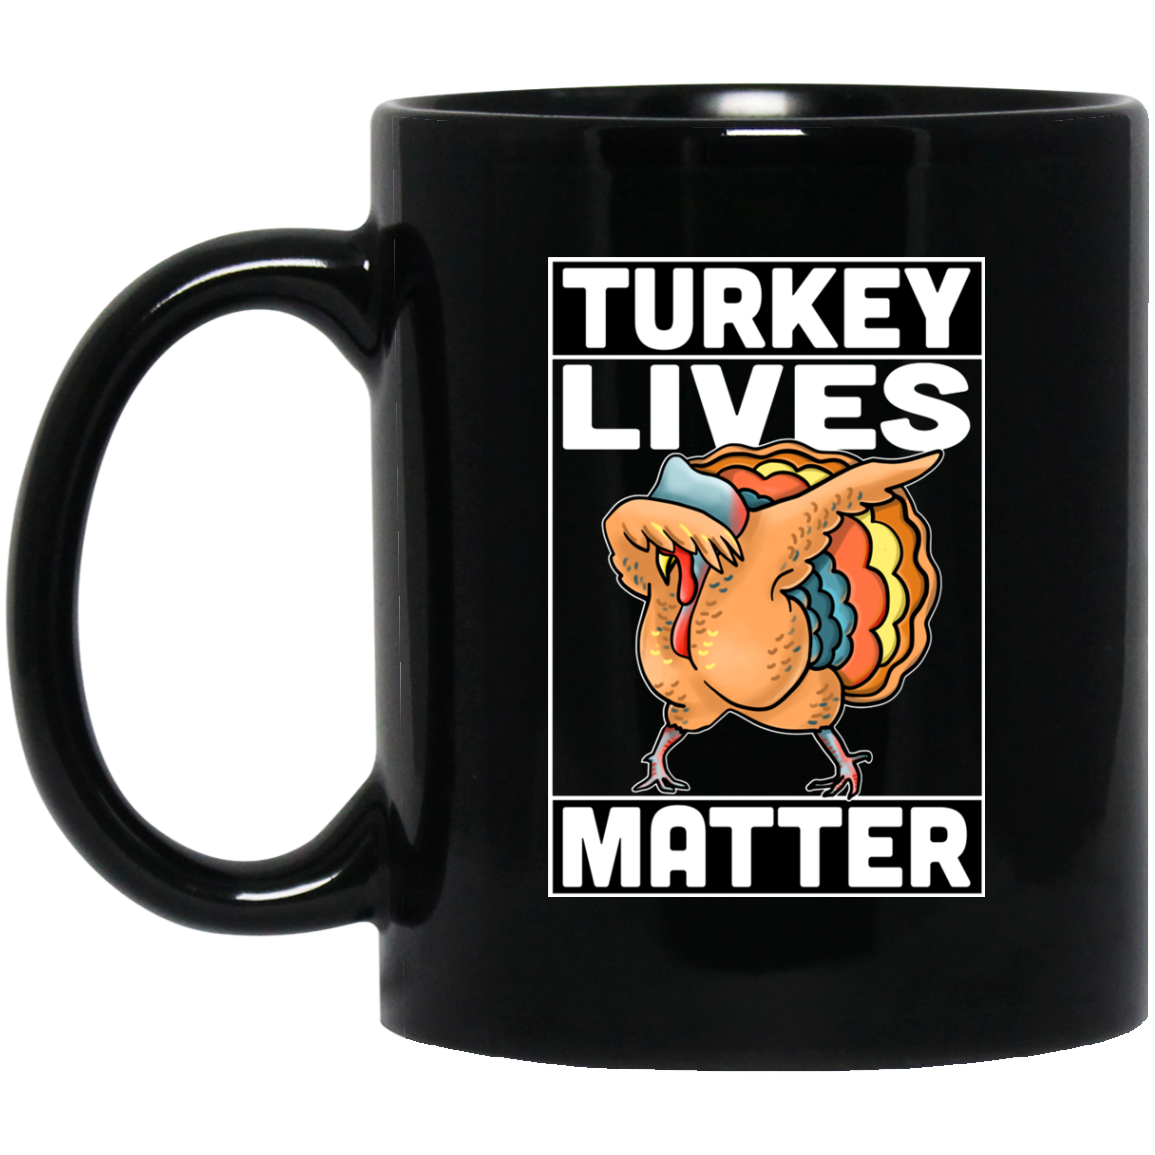 Vegan Mug - Turkey Lives Matter, Vegan Gifts - GoneBold.gift